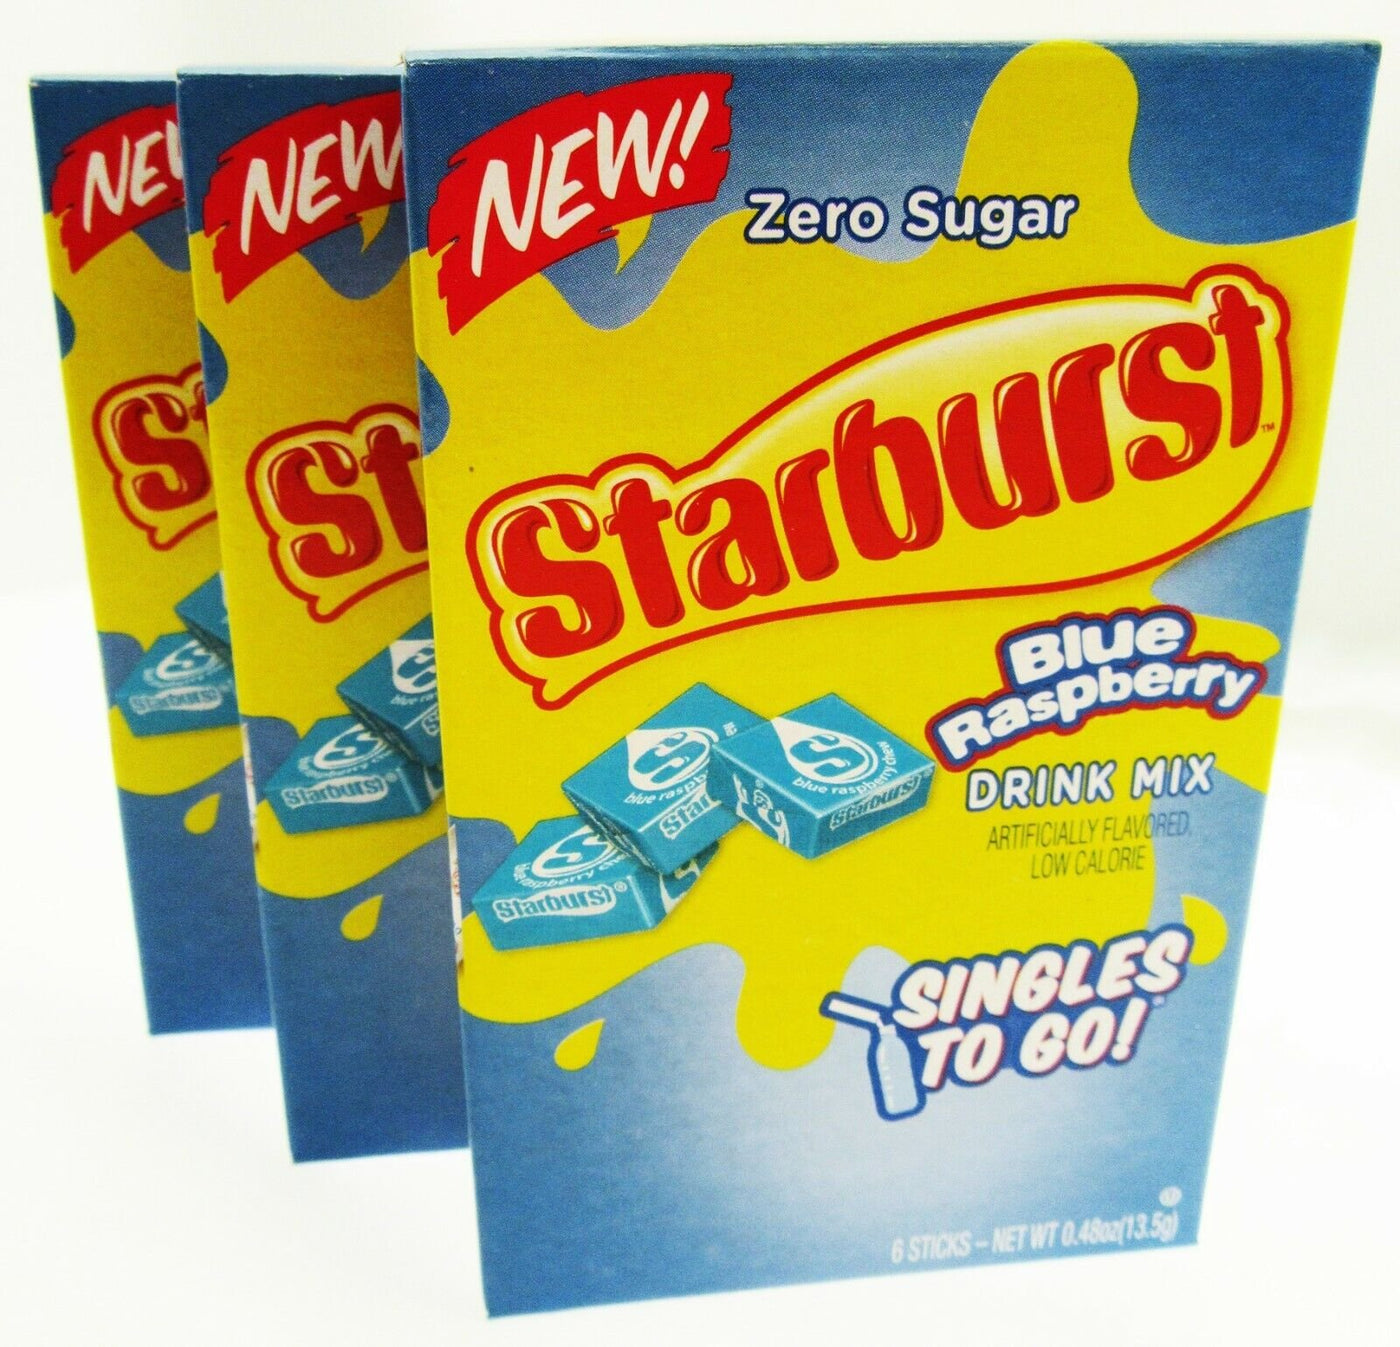 NEW! Starburst Blue Raspberry ~ Packets ~ Zero Sugar Free ~ Drink Mix ~ 3 Boxes